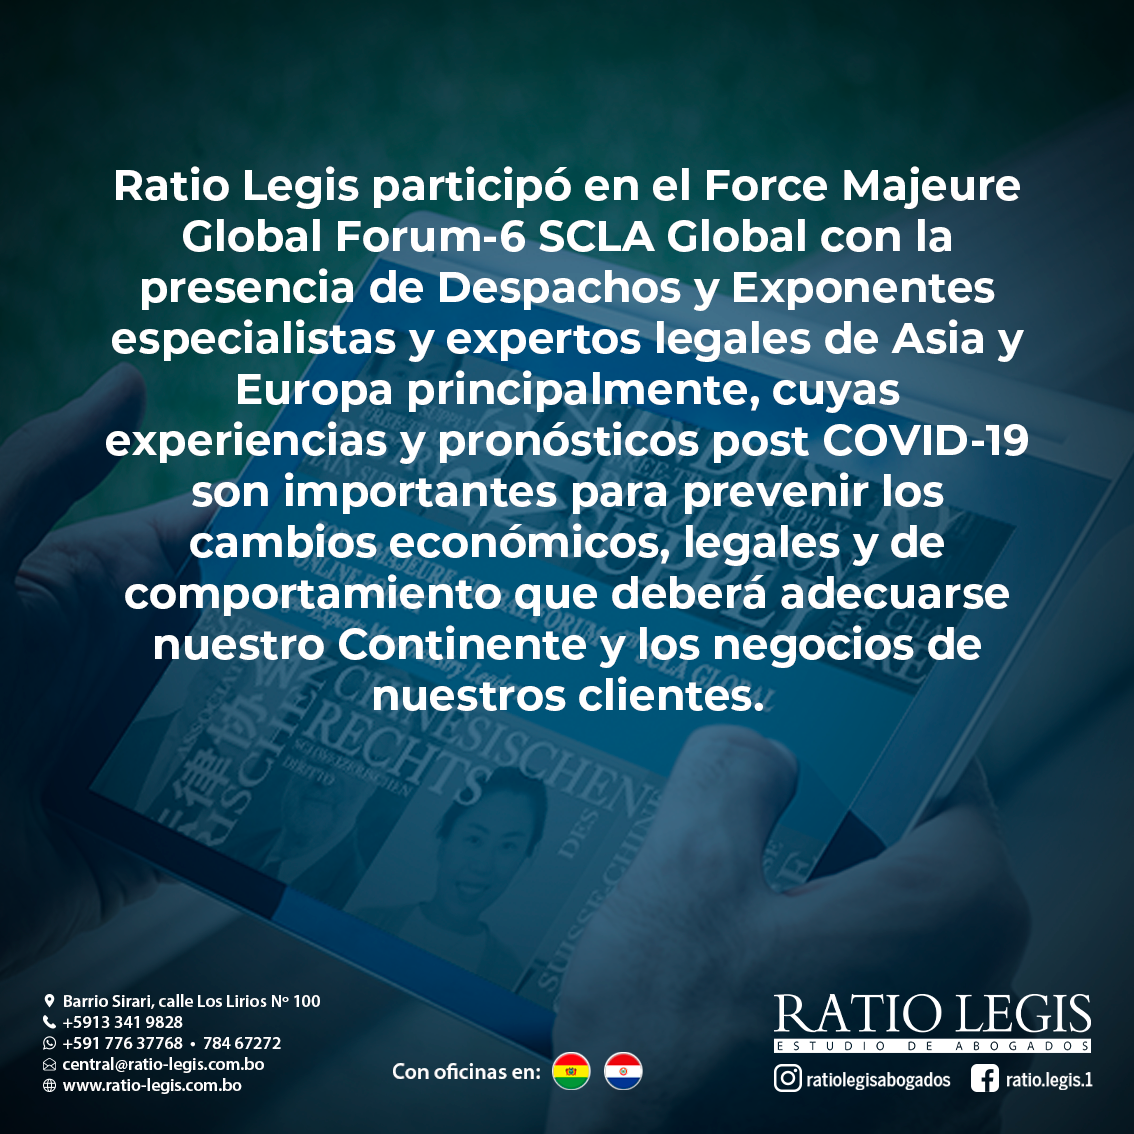 Ratio Legis participó en el Force Majeure Global Forum-6 SCLA Global